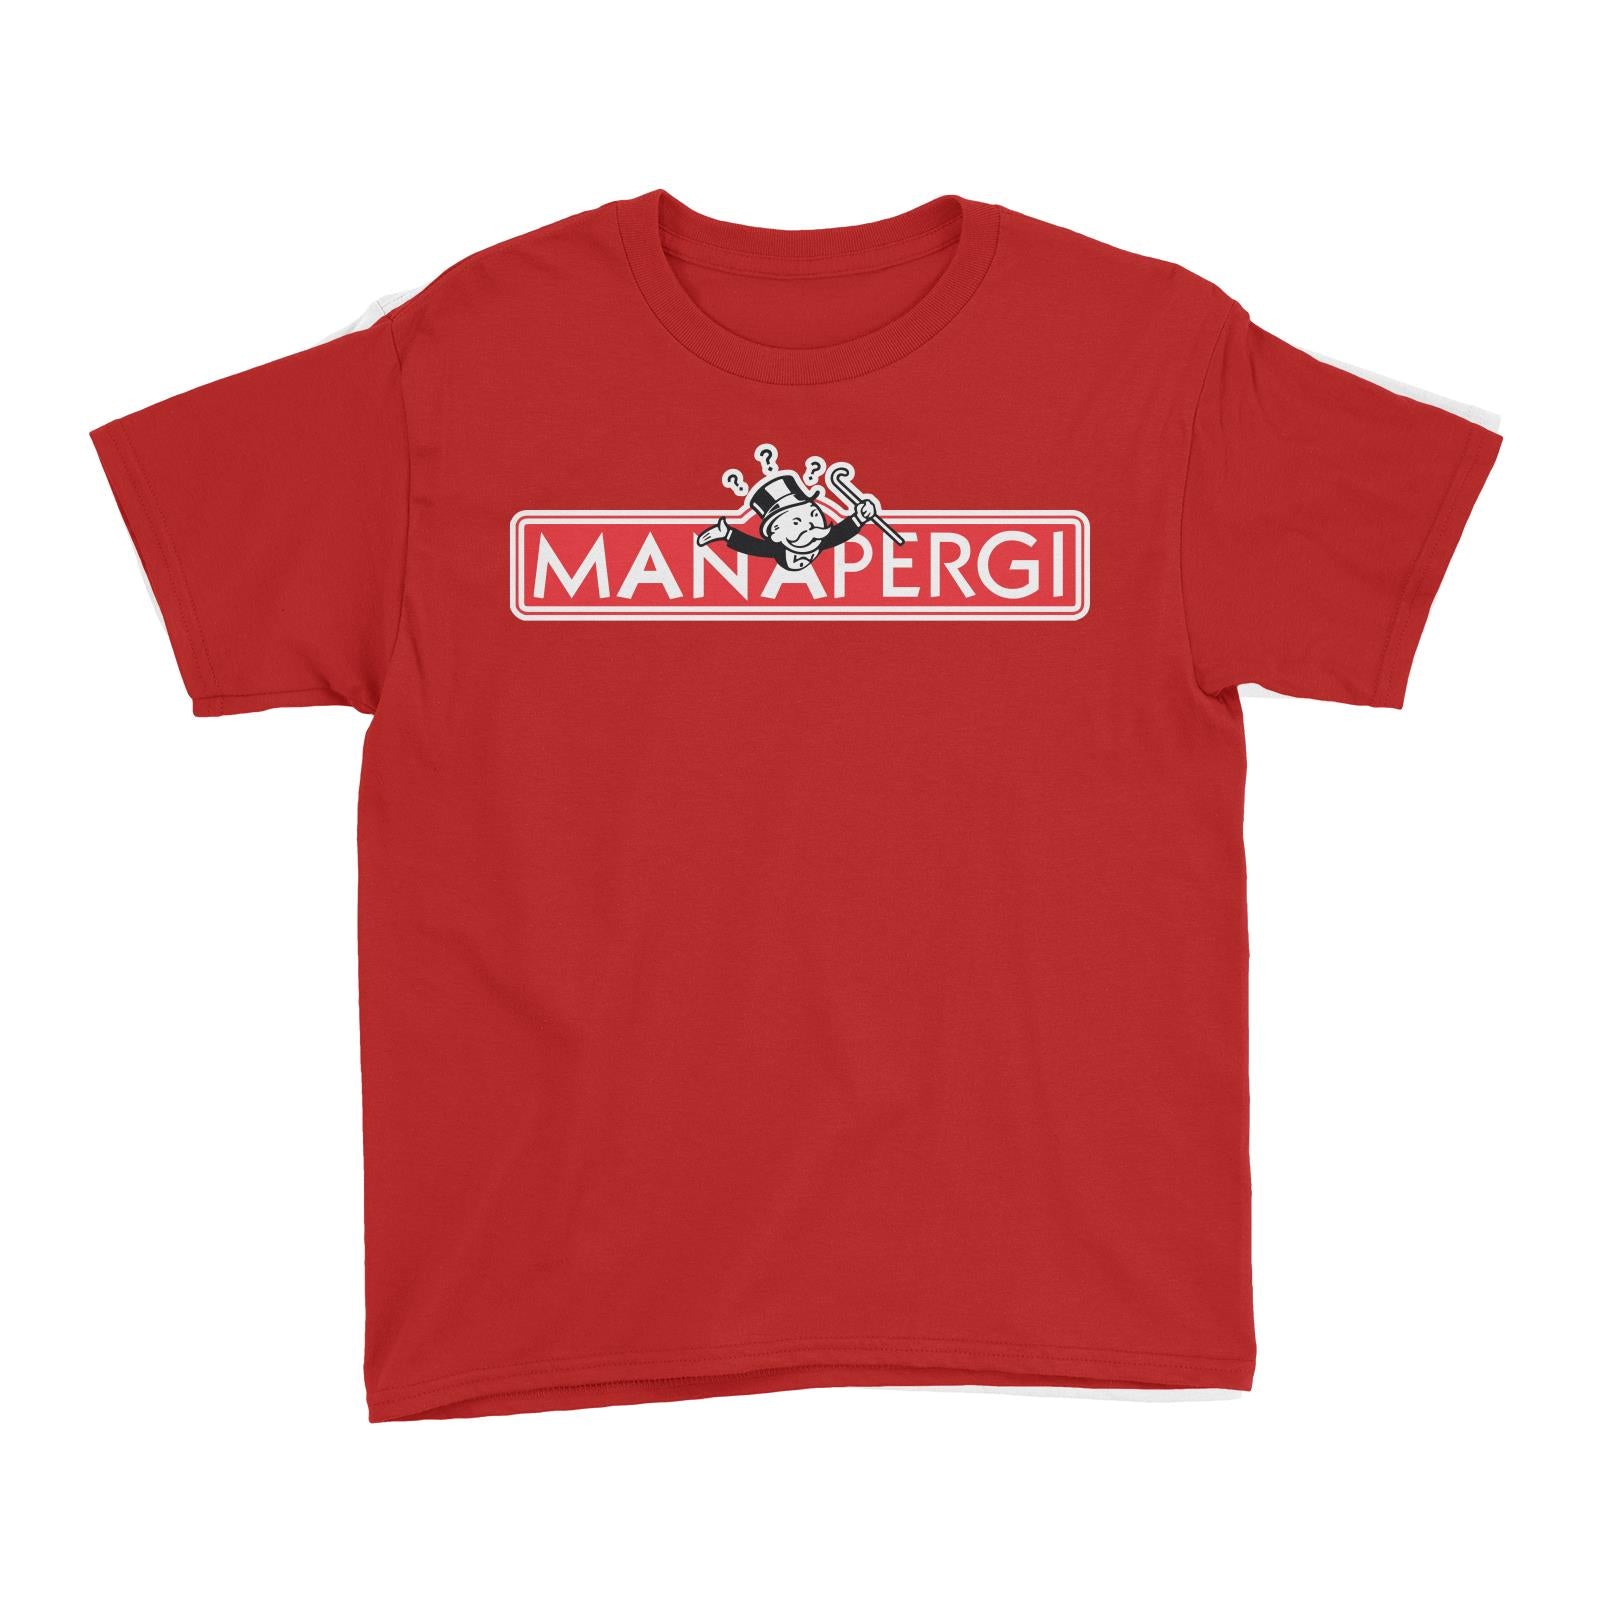 Slang Statement Manapergi Kid's T-Shirt